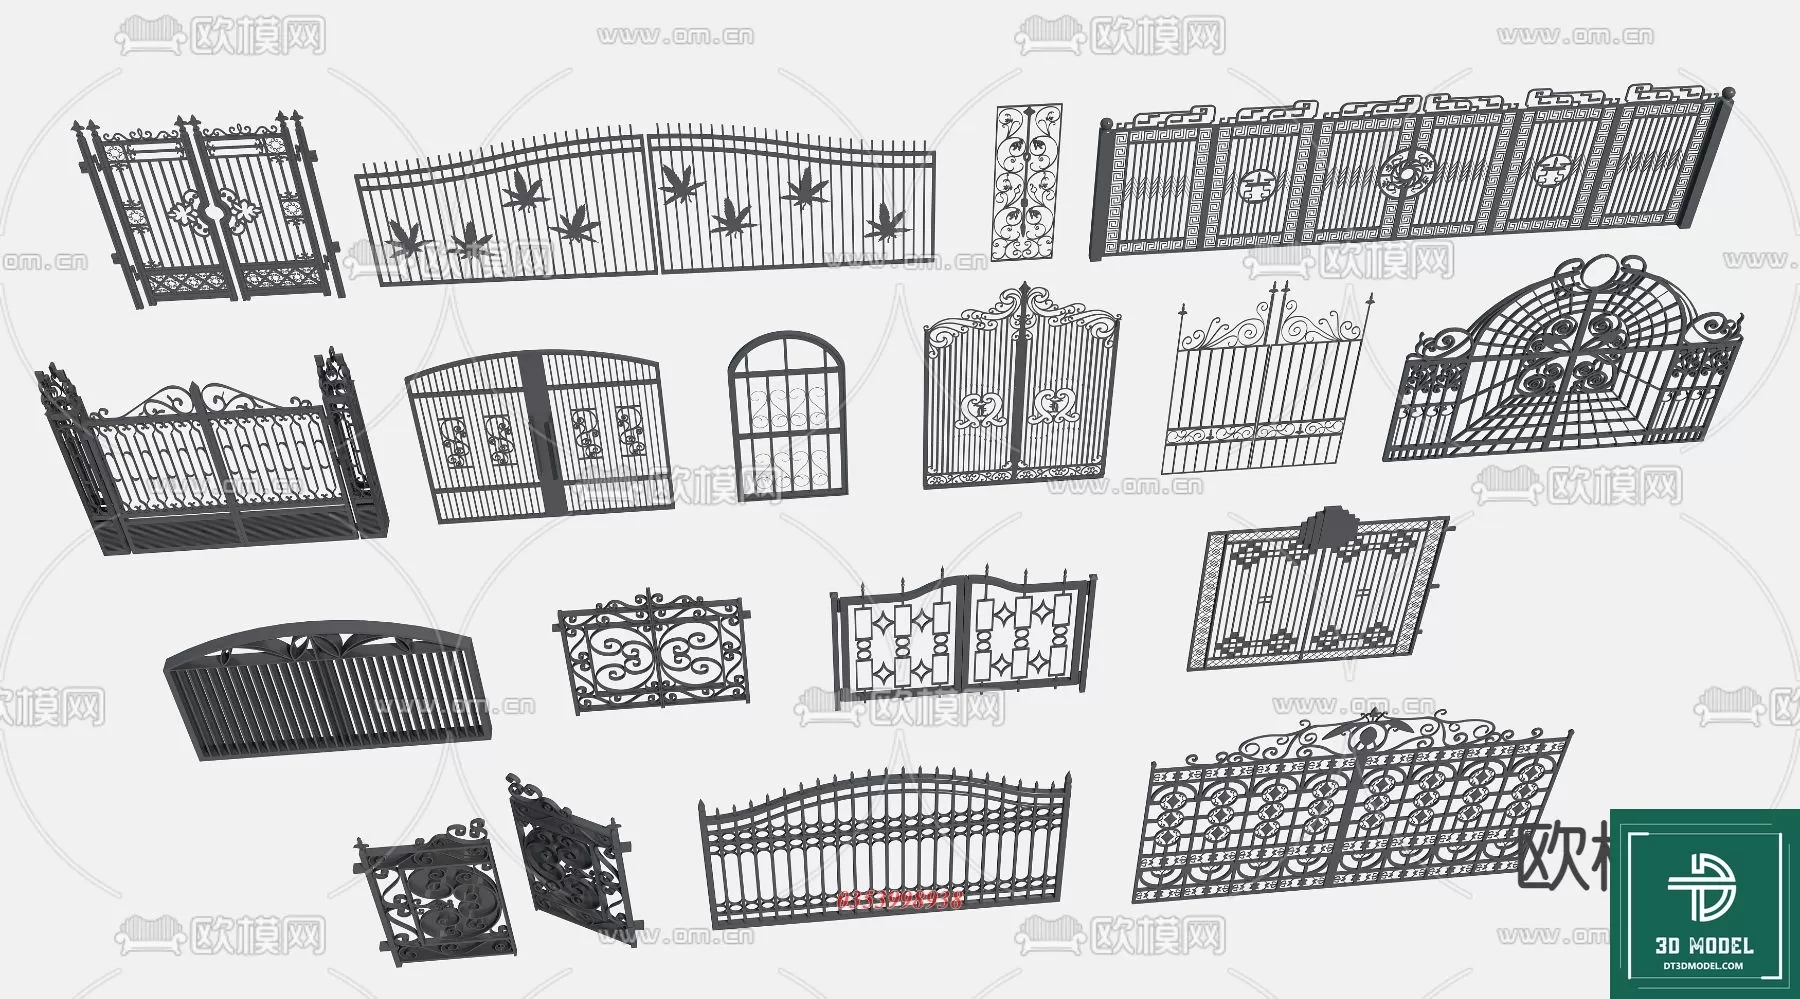 CLASSIC GATE – 3D MODELS – 092